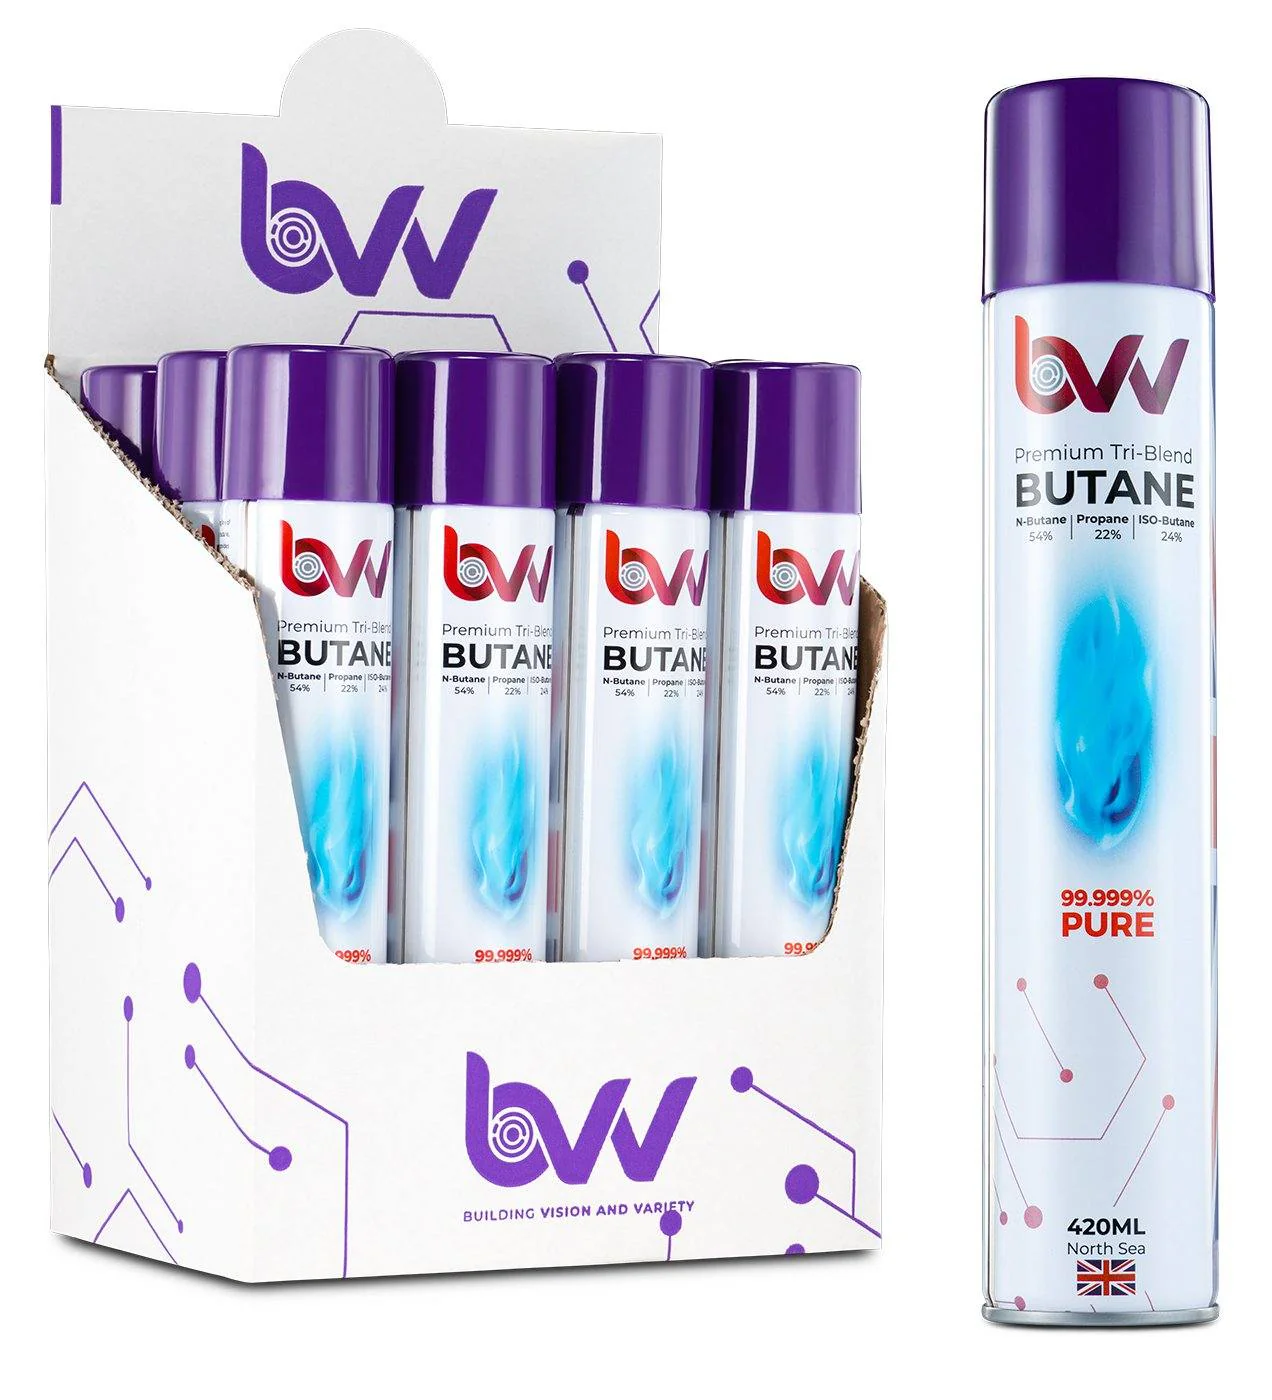 BVV™ 420ml Premium Tri-Blend Butane 99.999% Pure Questions & Answers